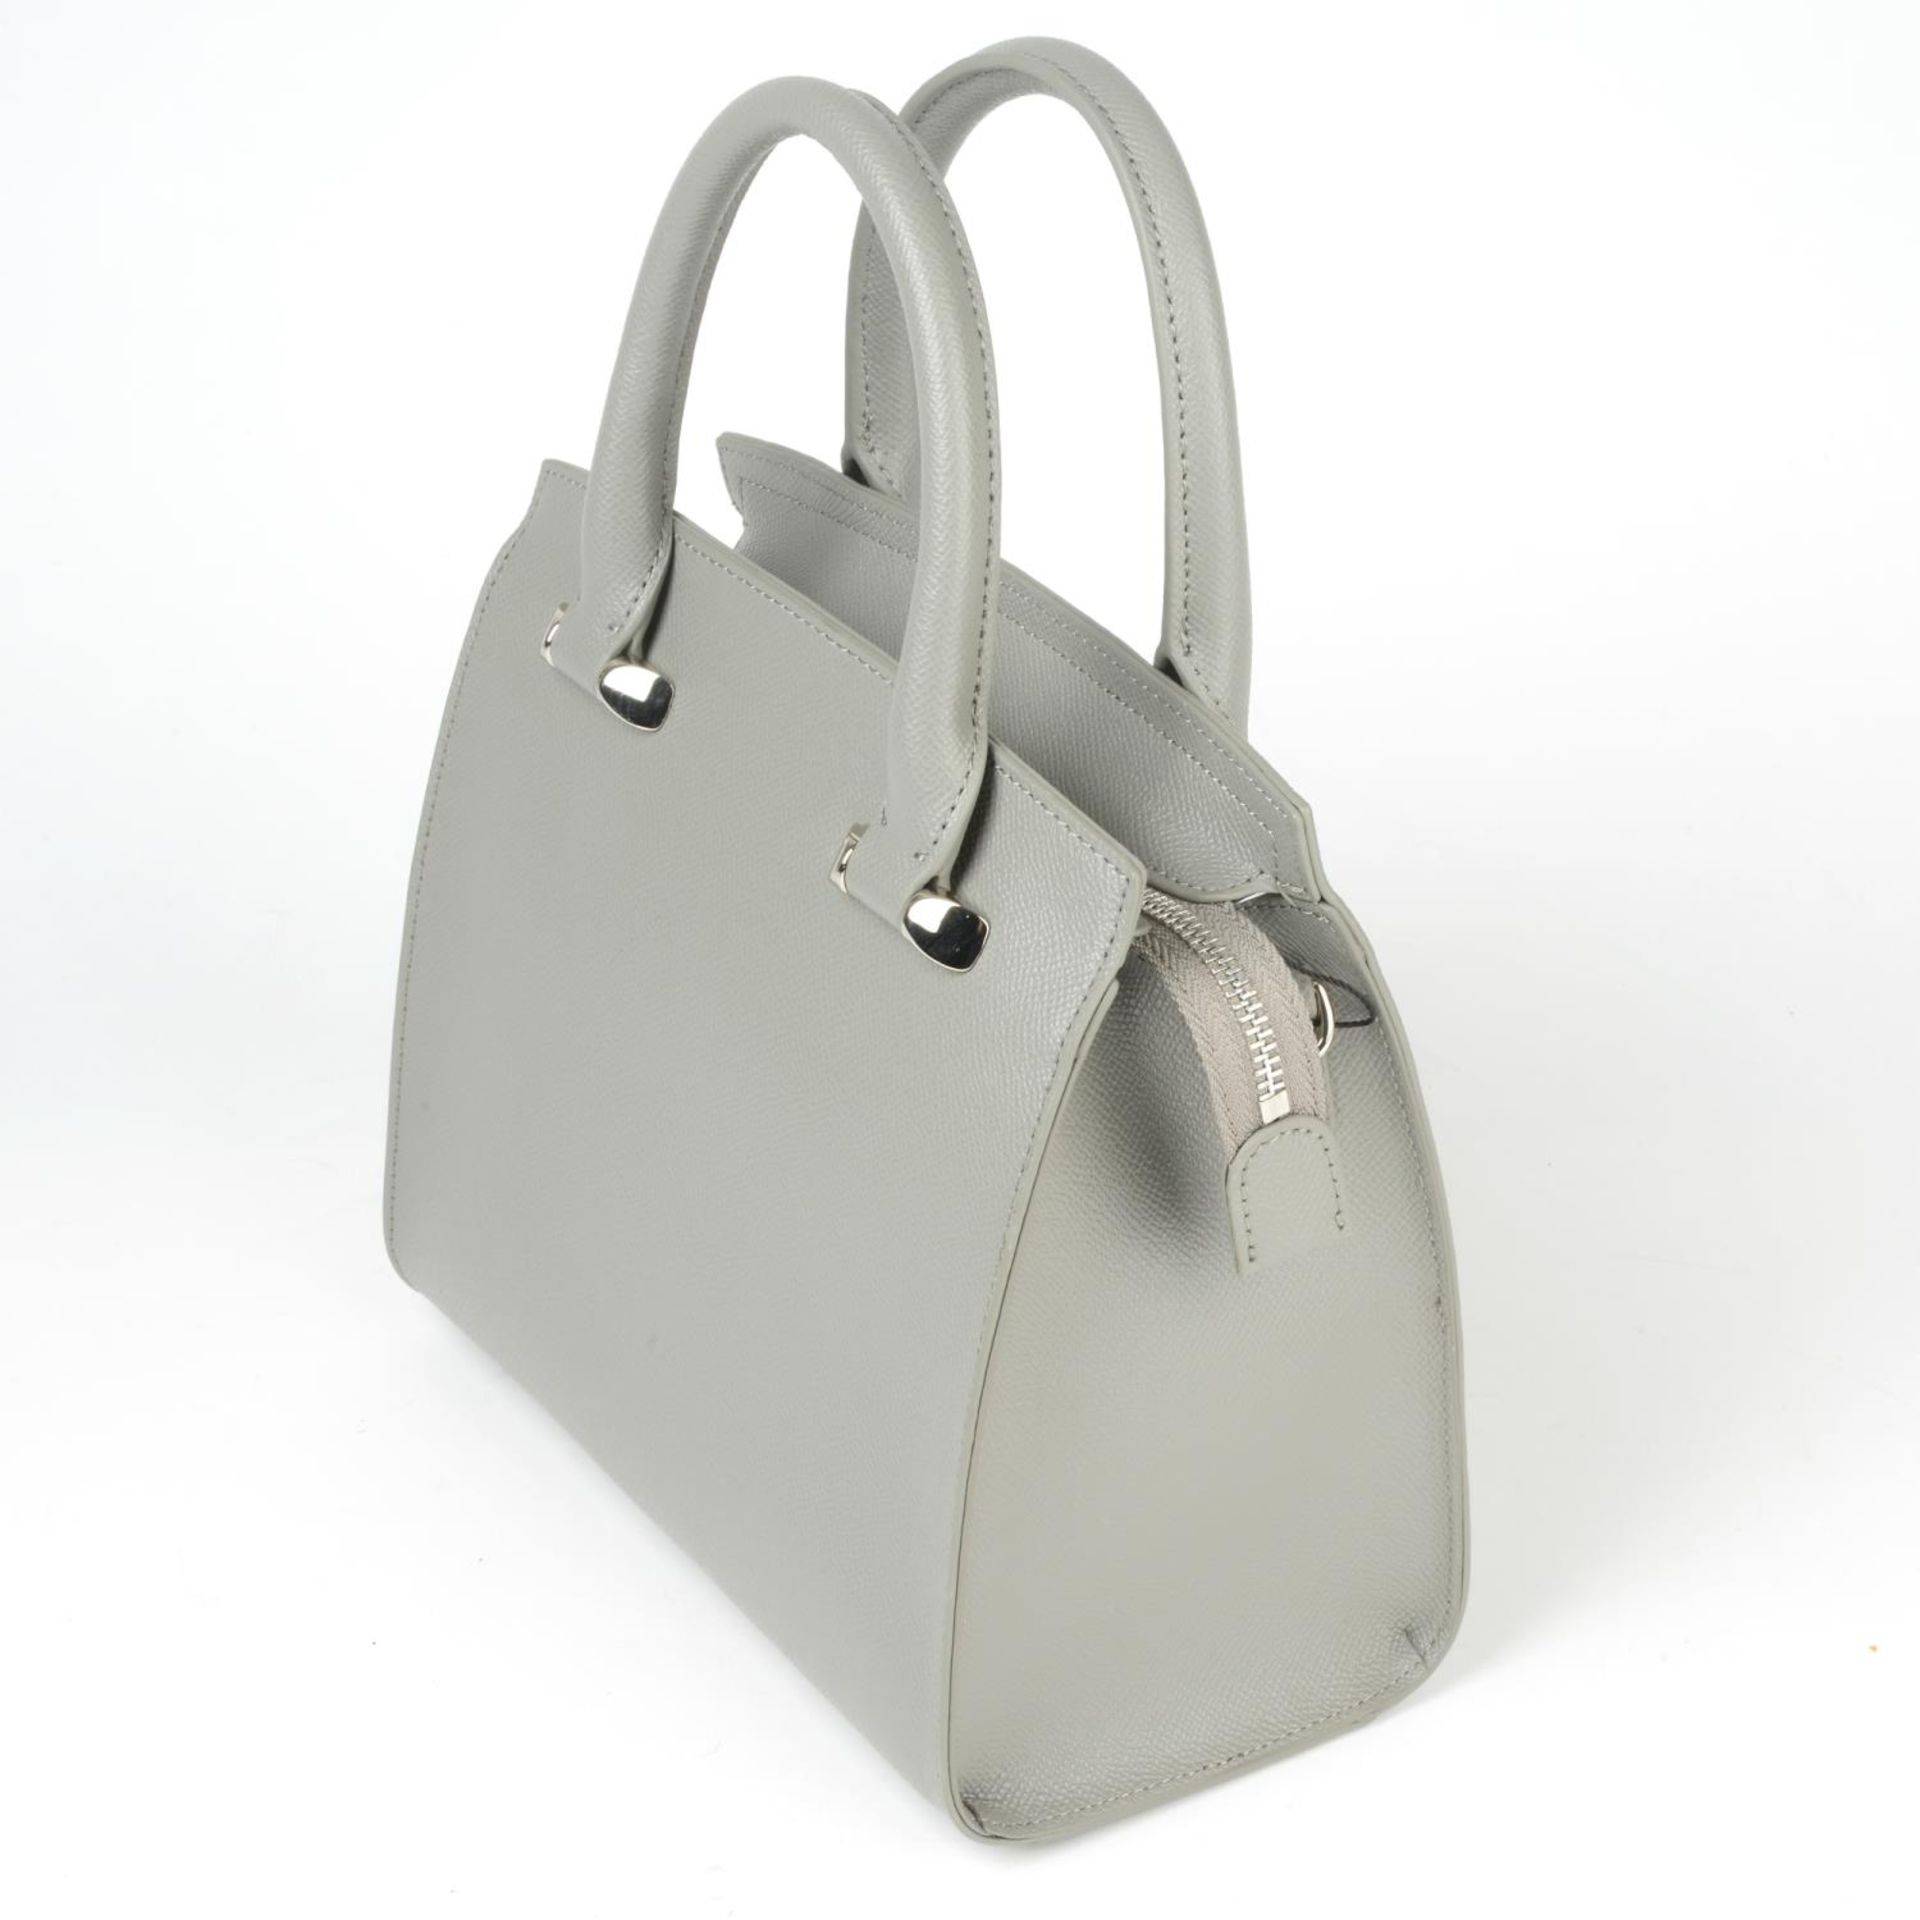 CAVALLO MODA - three leather Calabria handbags. - Bild 4 aus 7